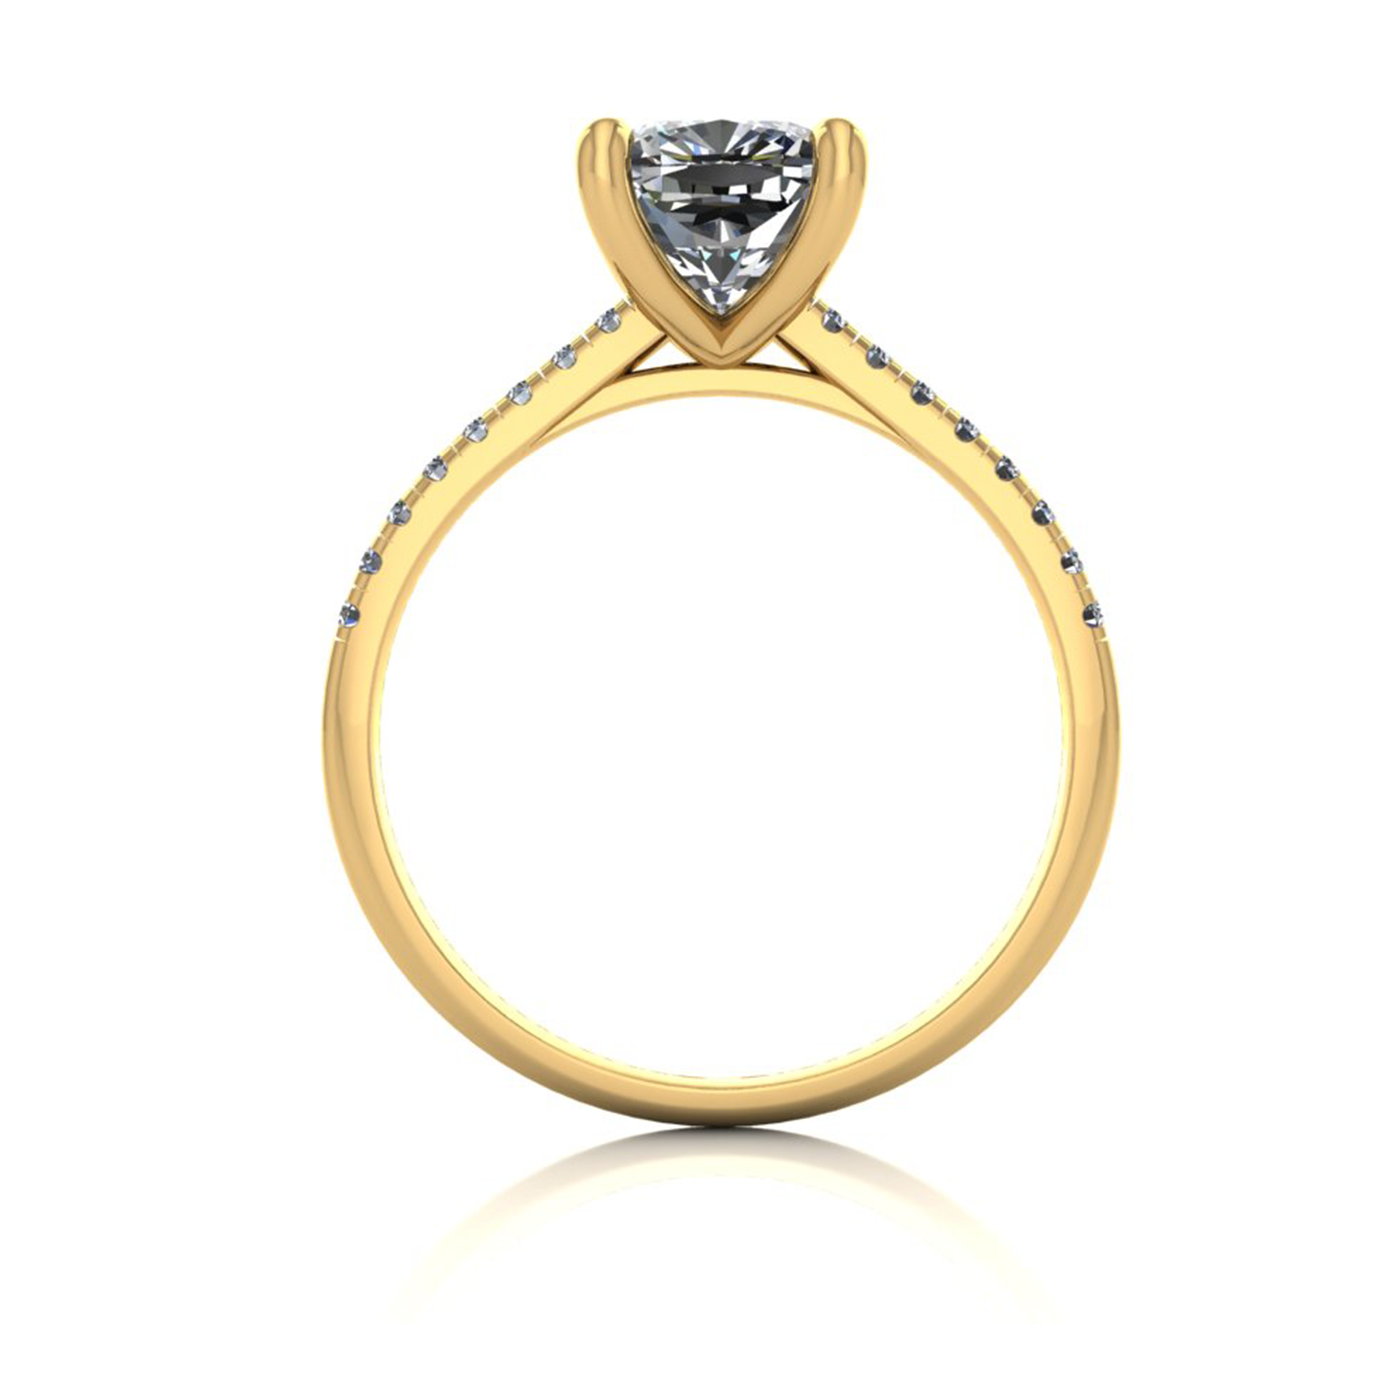 18k yellow gold 2.0ct 4 prongs cushion cut diamond engagement ring with whisper thin pavÉ set band